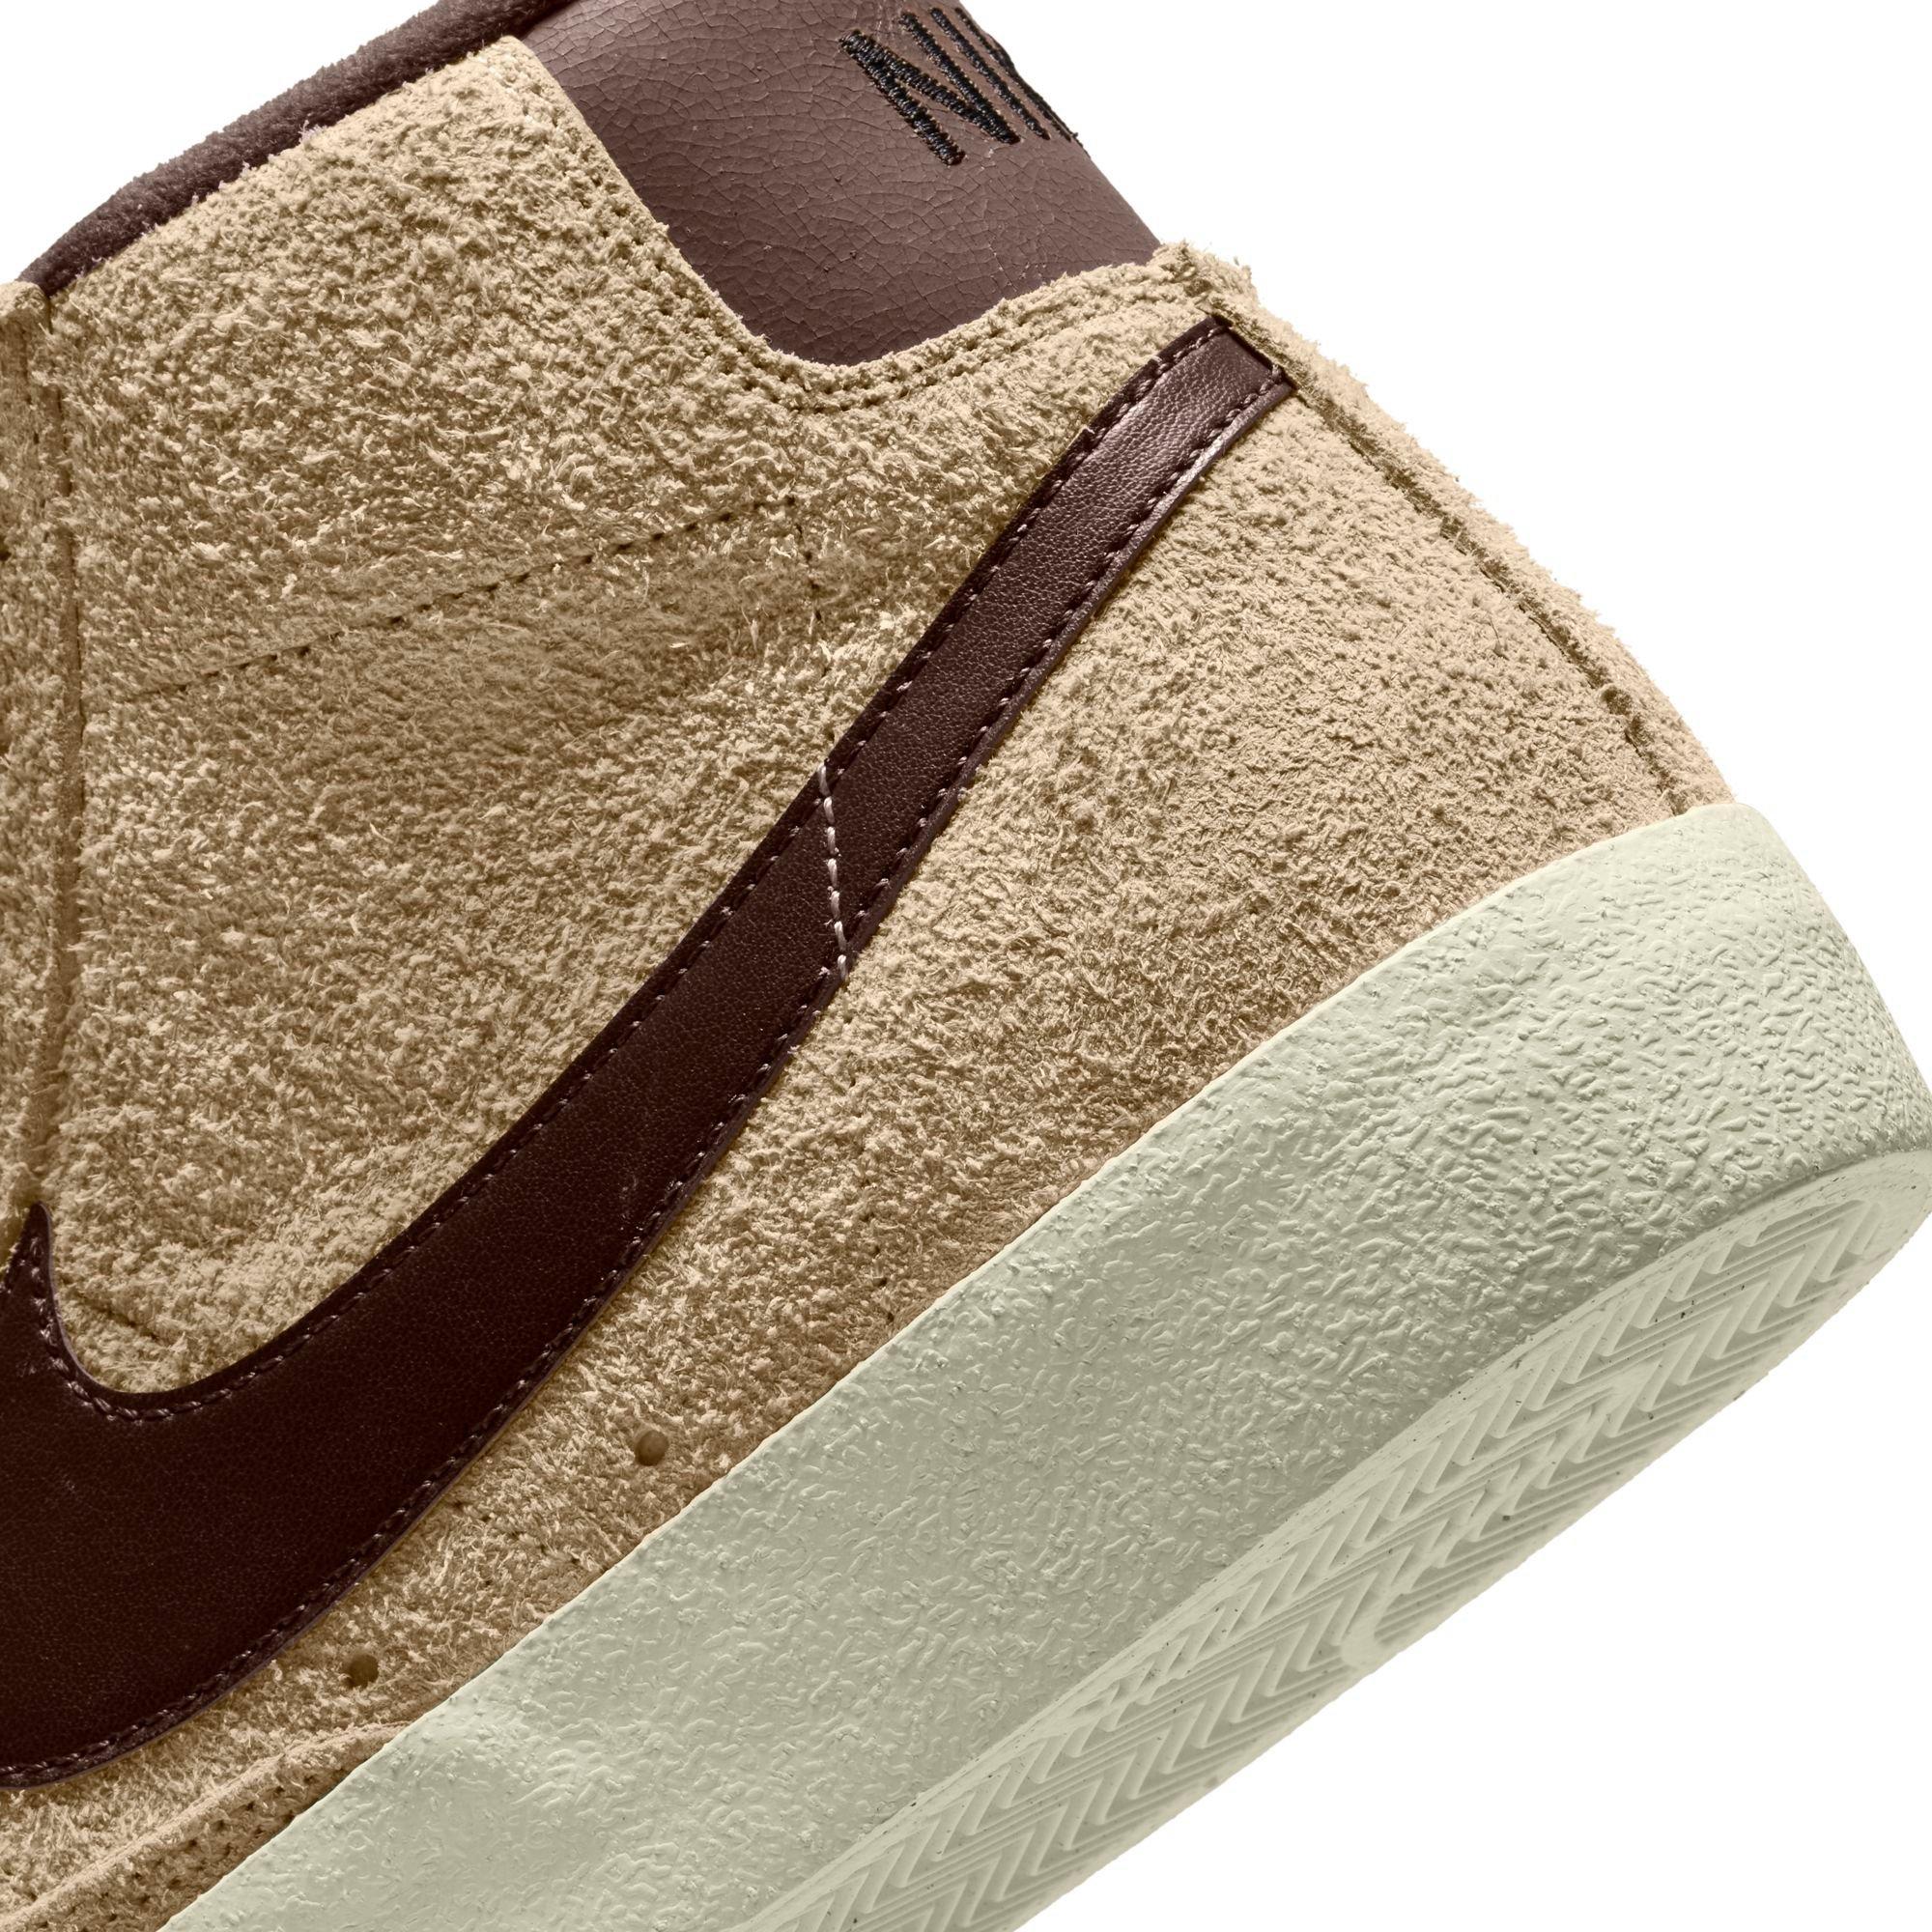  Nike mens Mid '77 Premium Shoes Blazer, Rattan/Light  Chocolate, 8.5